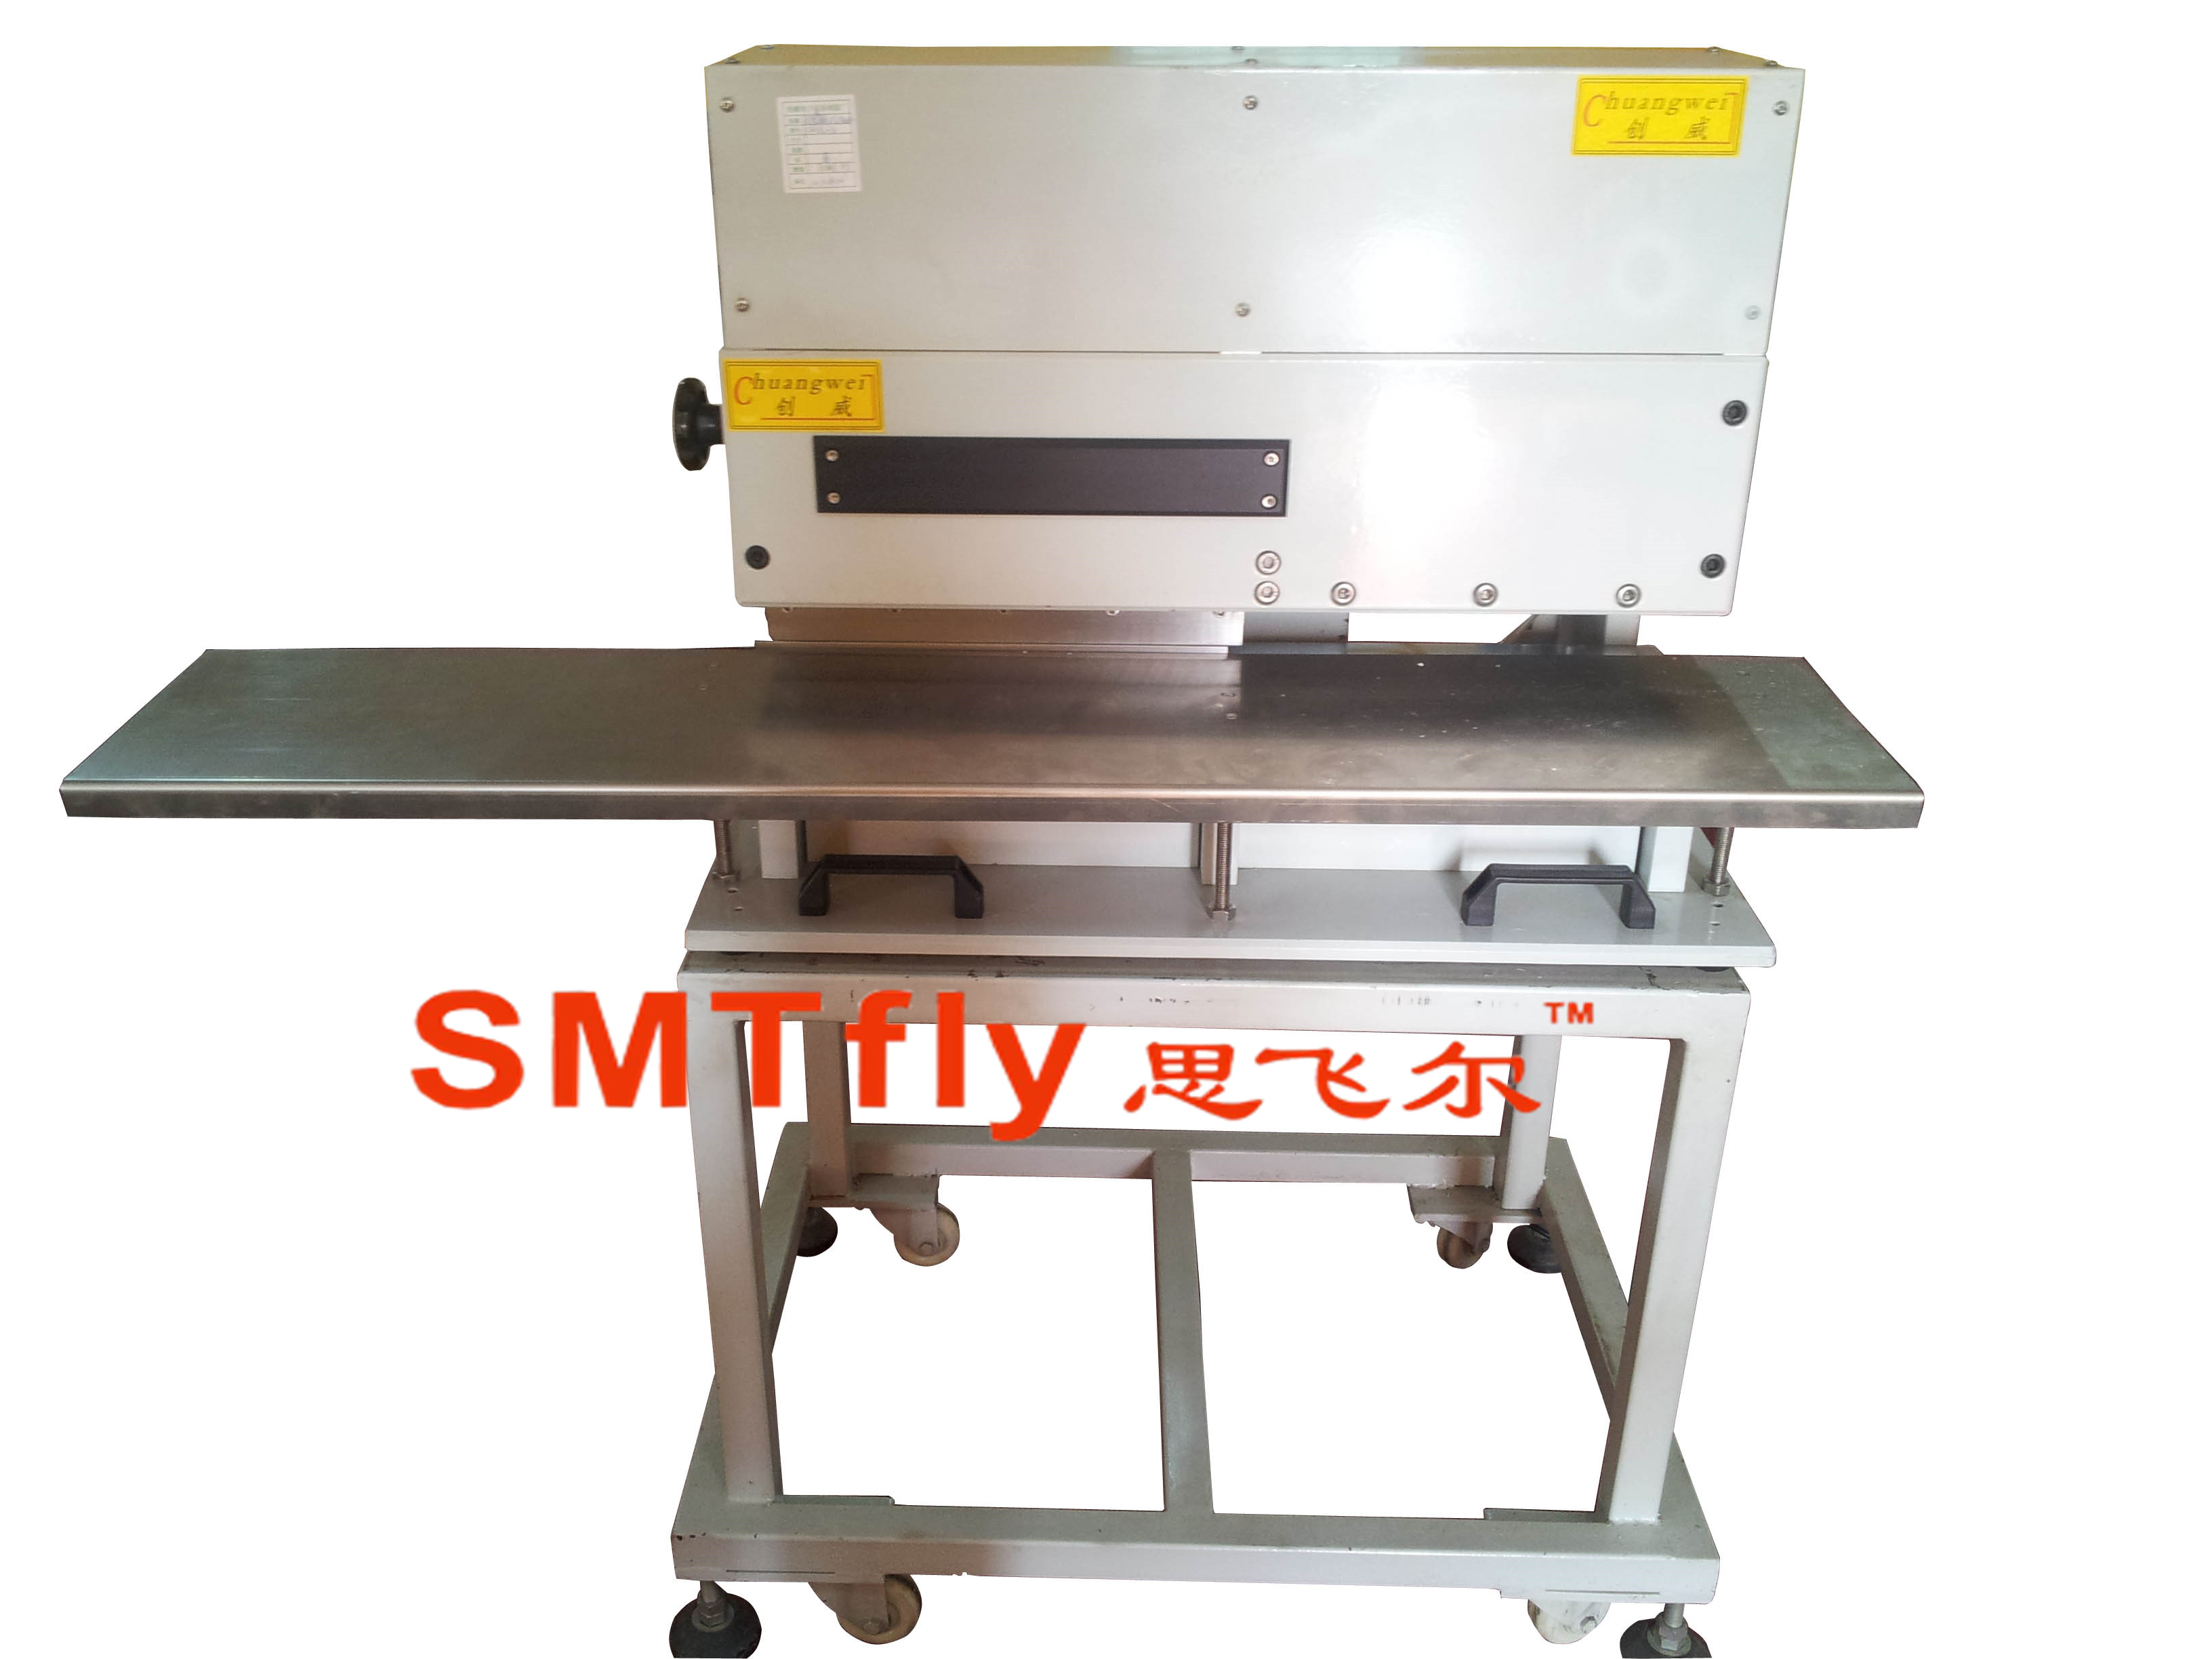 PCB Boards Separating Equipment,SMTfly-3